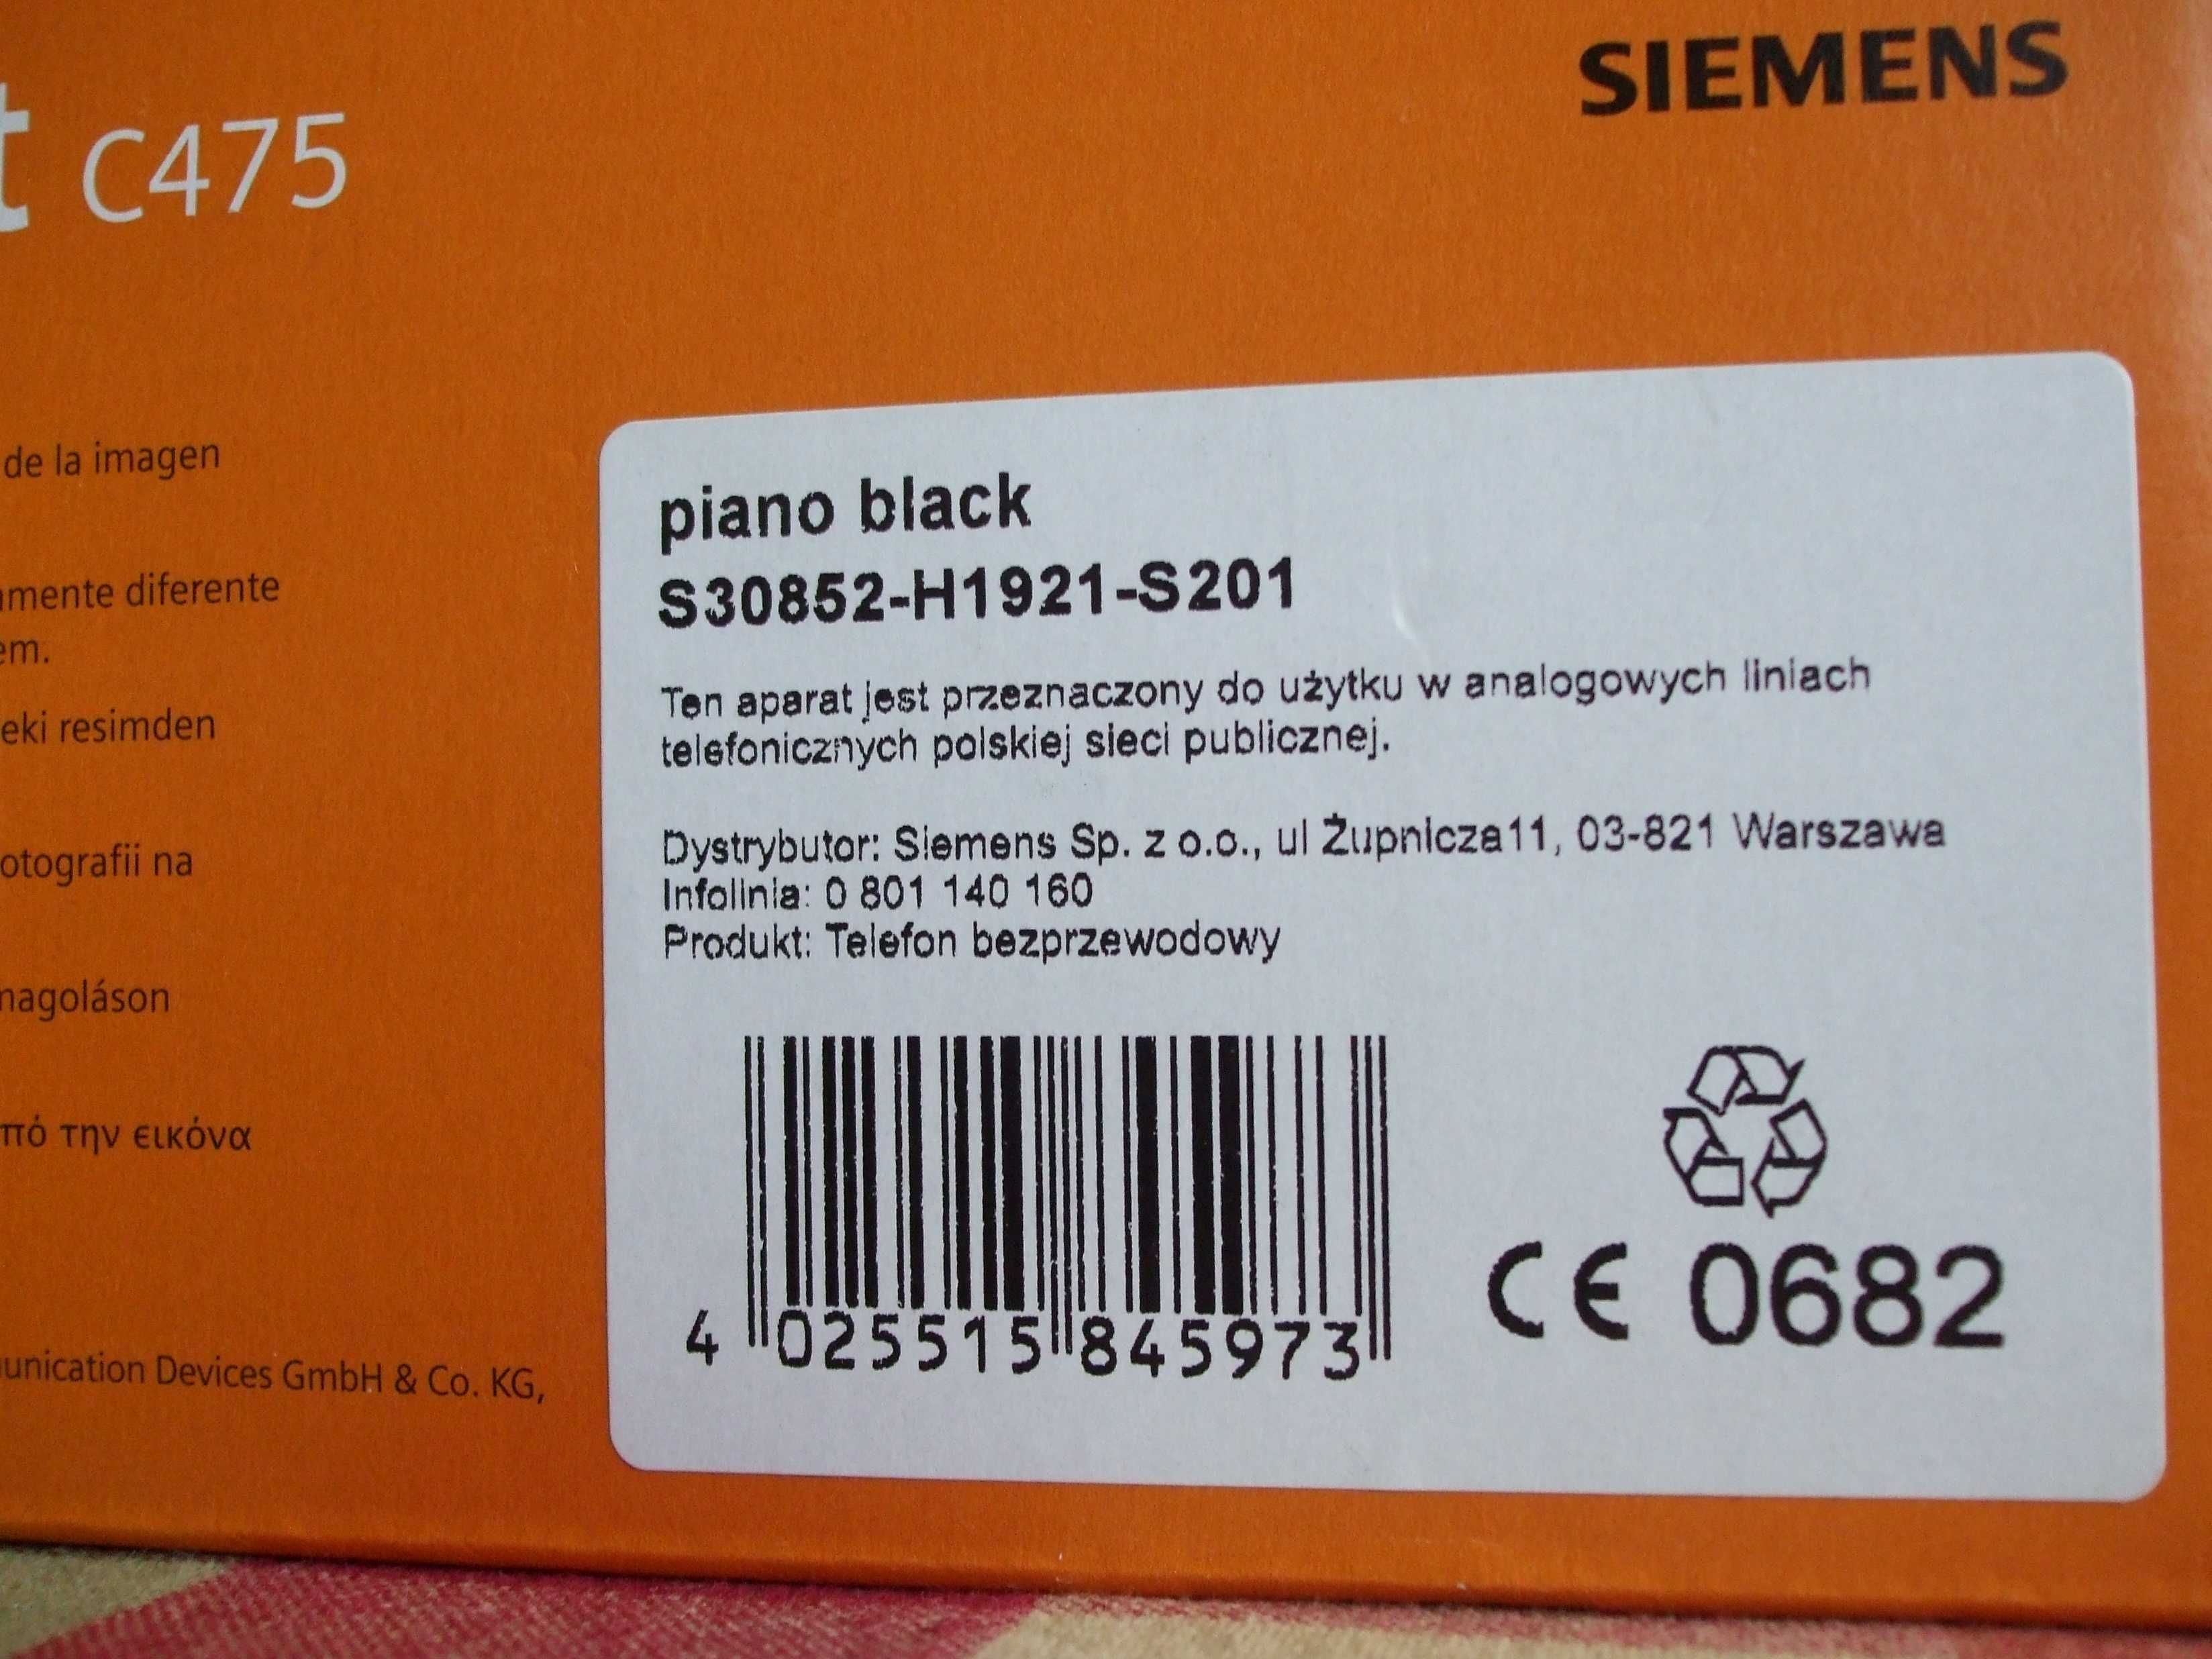 Siemens Gigaset C475 Piano Black